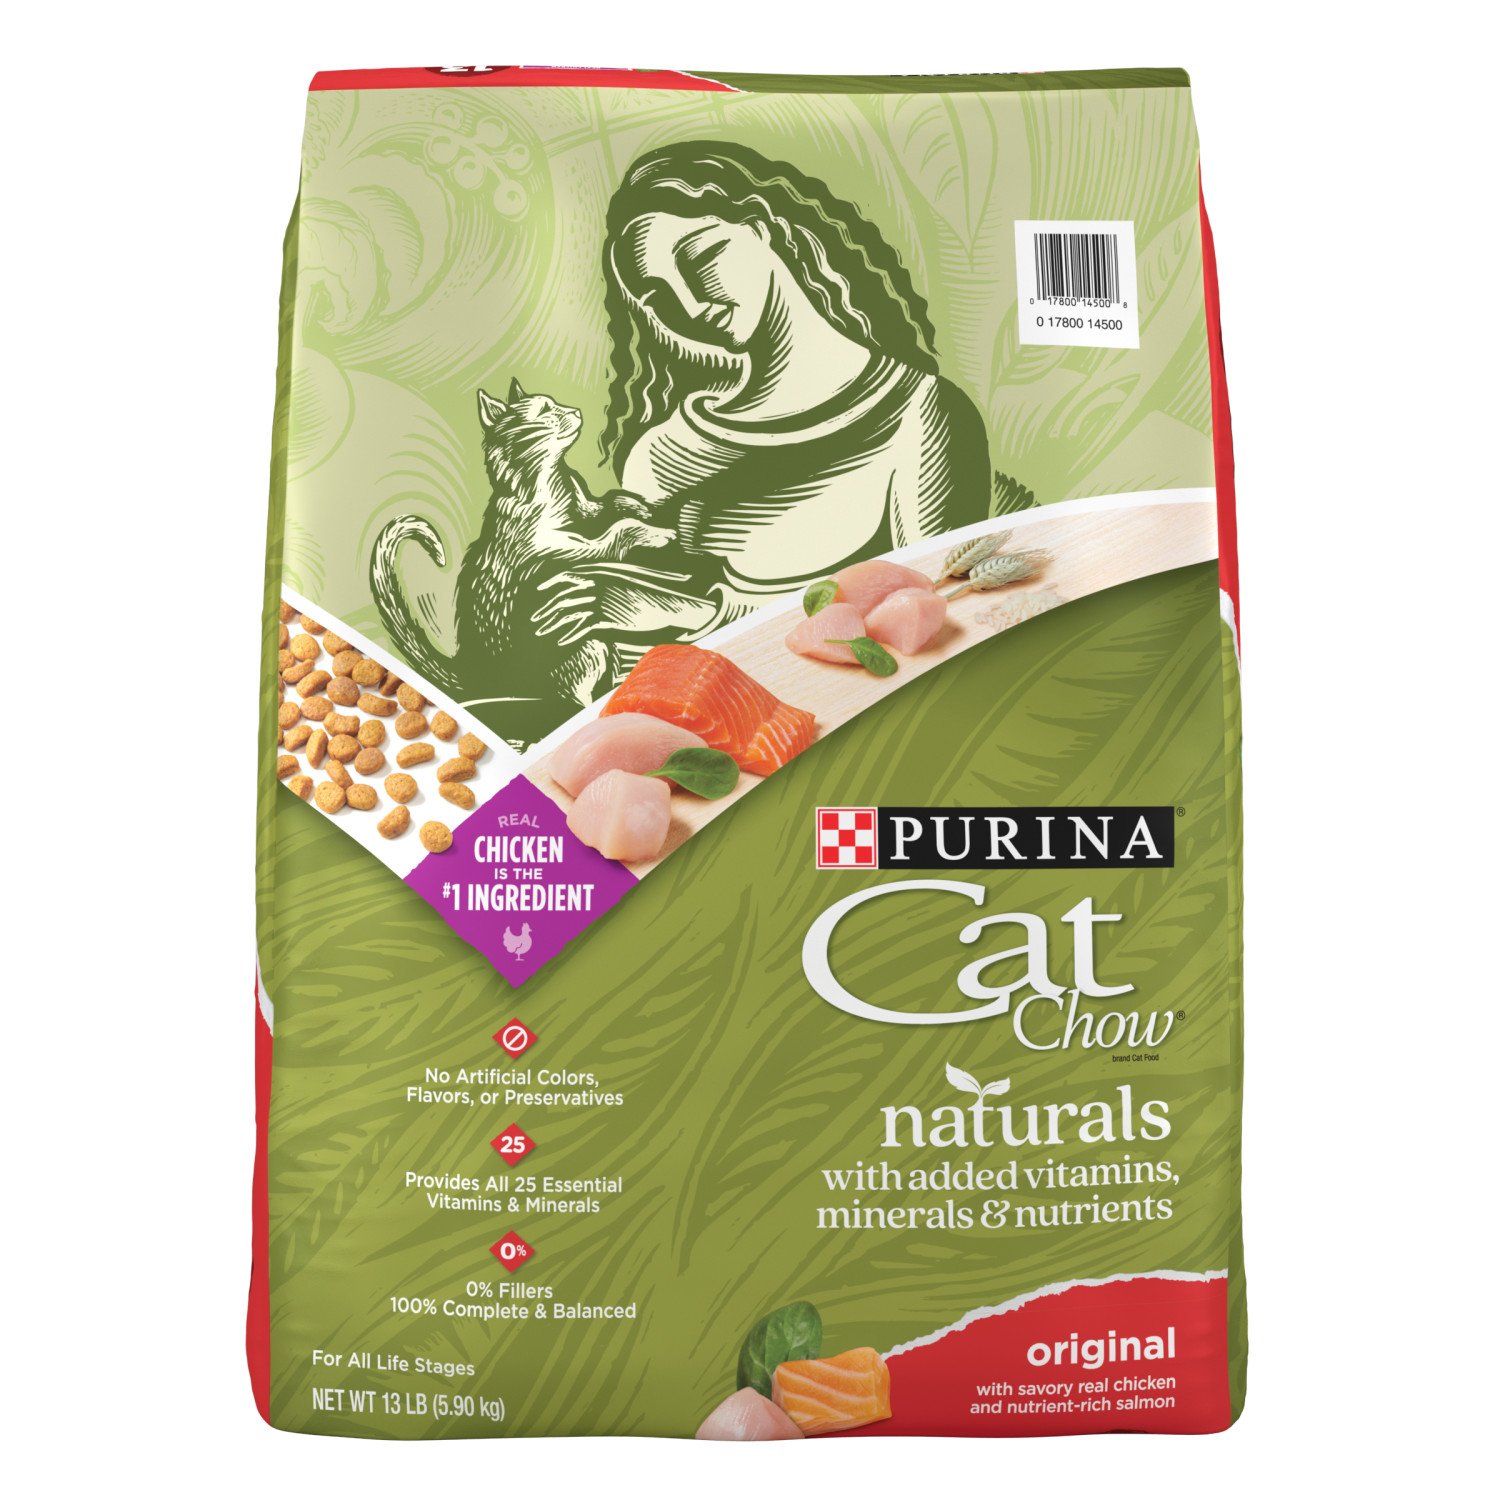 purina cat food green bag